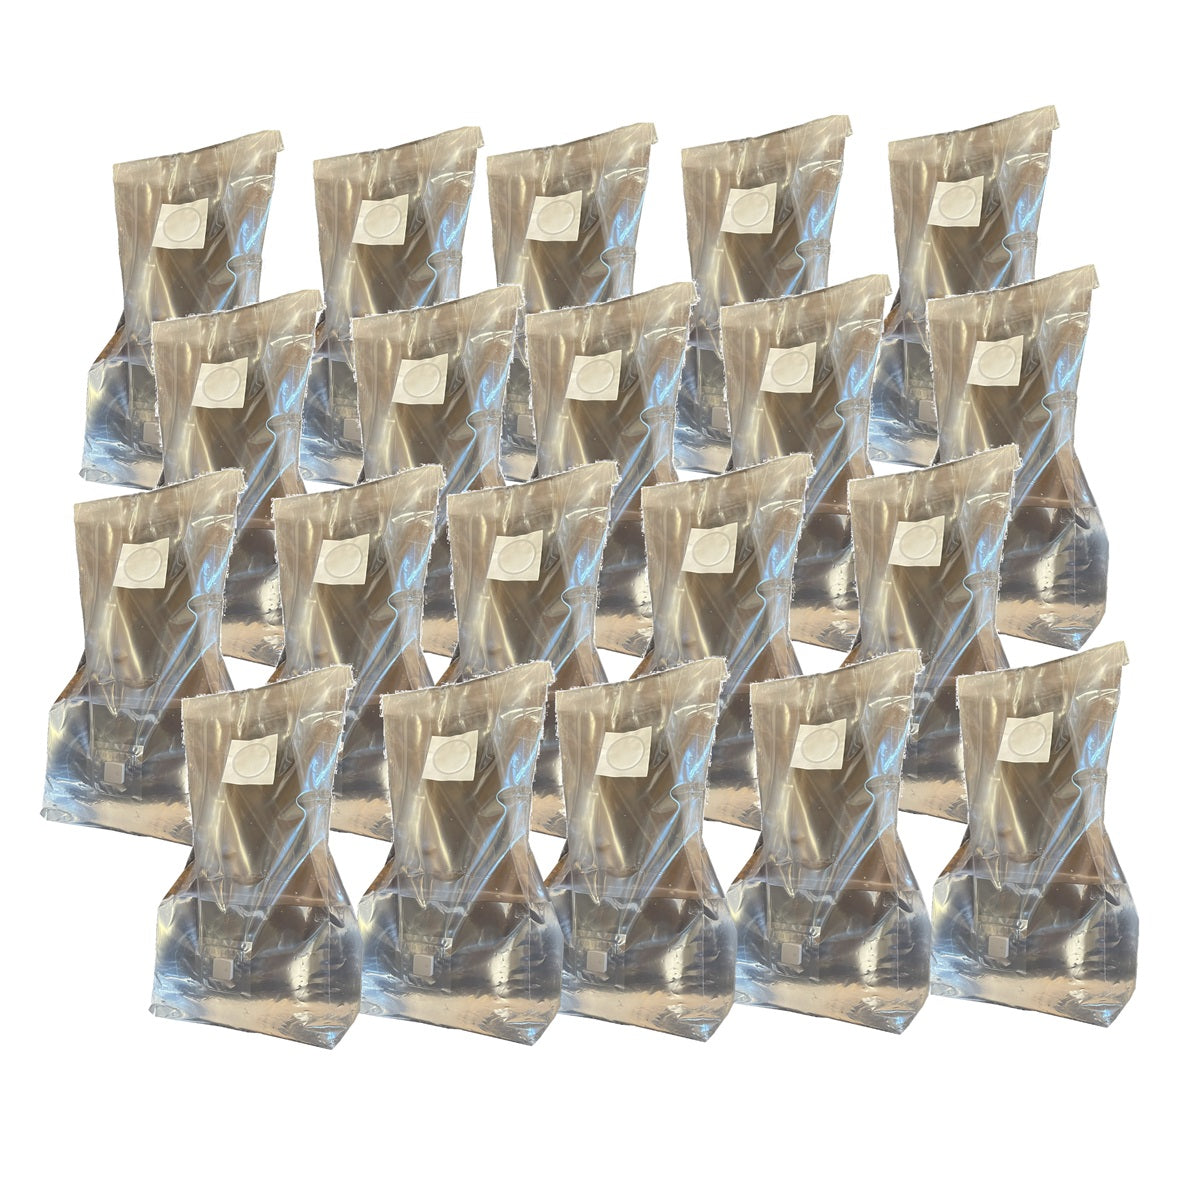 Case Pack. FGI Ace of Spades Premium Myco Grow Bags. Multi pack. 30 packs. 300 total bags.